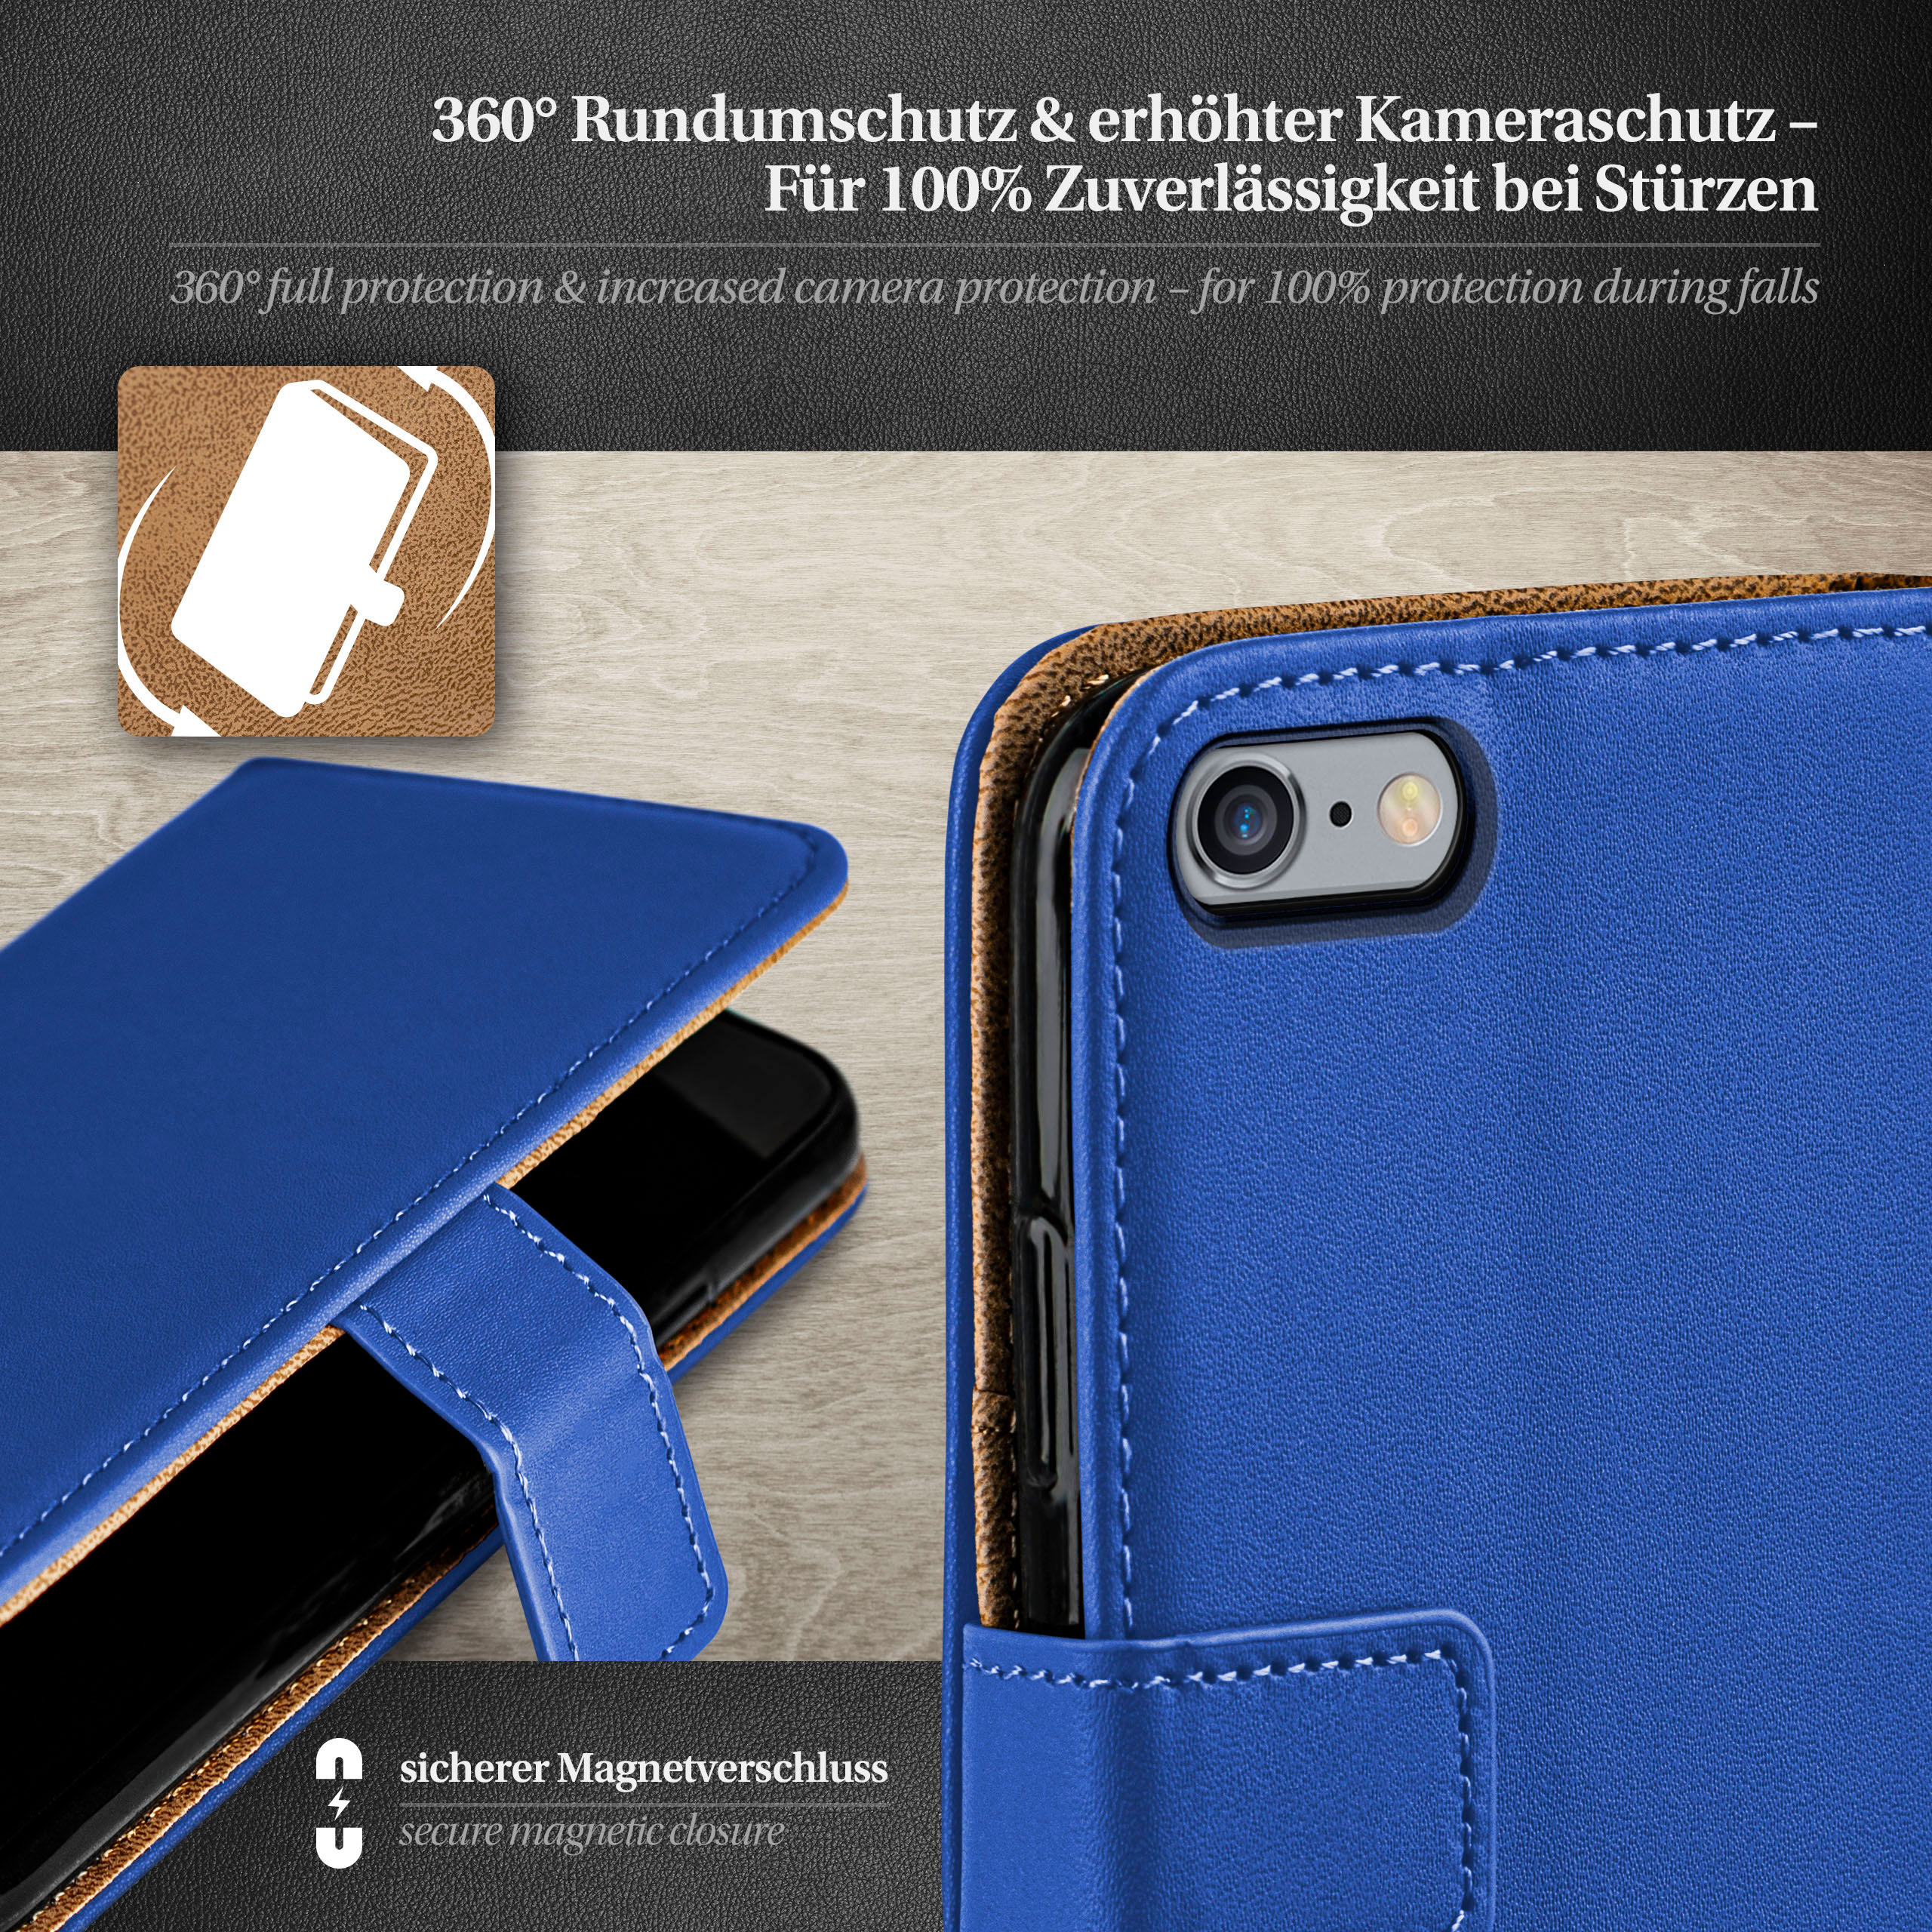 MOEX Book Case, Bookcover, iPhone / Plus, Plus 6 Royal-Blue 6s Apple